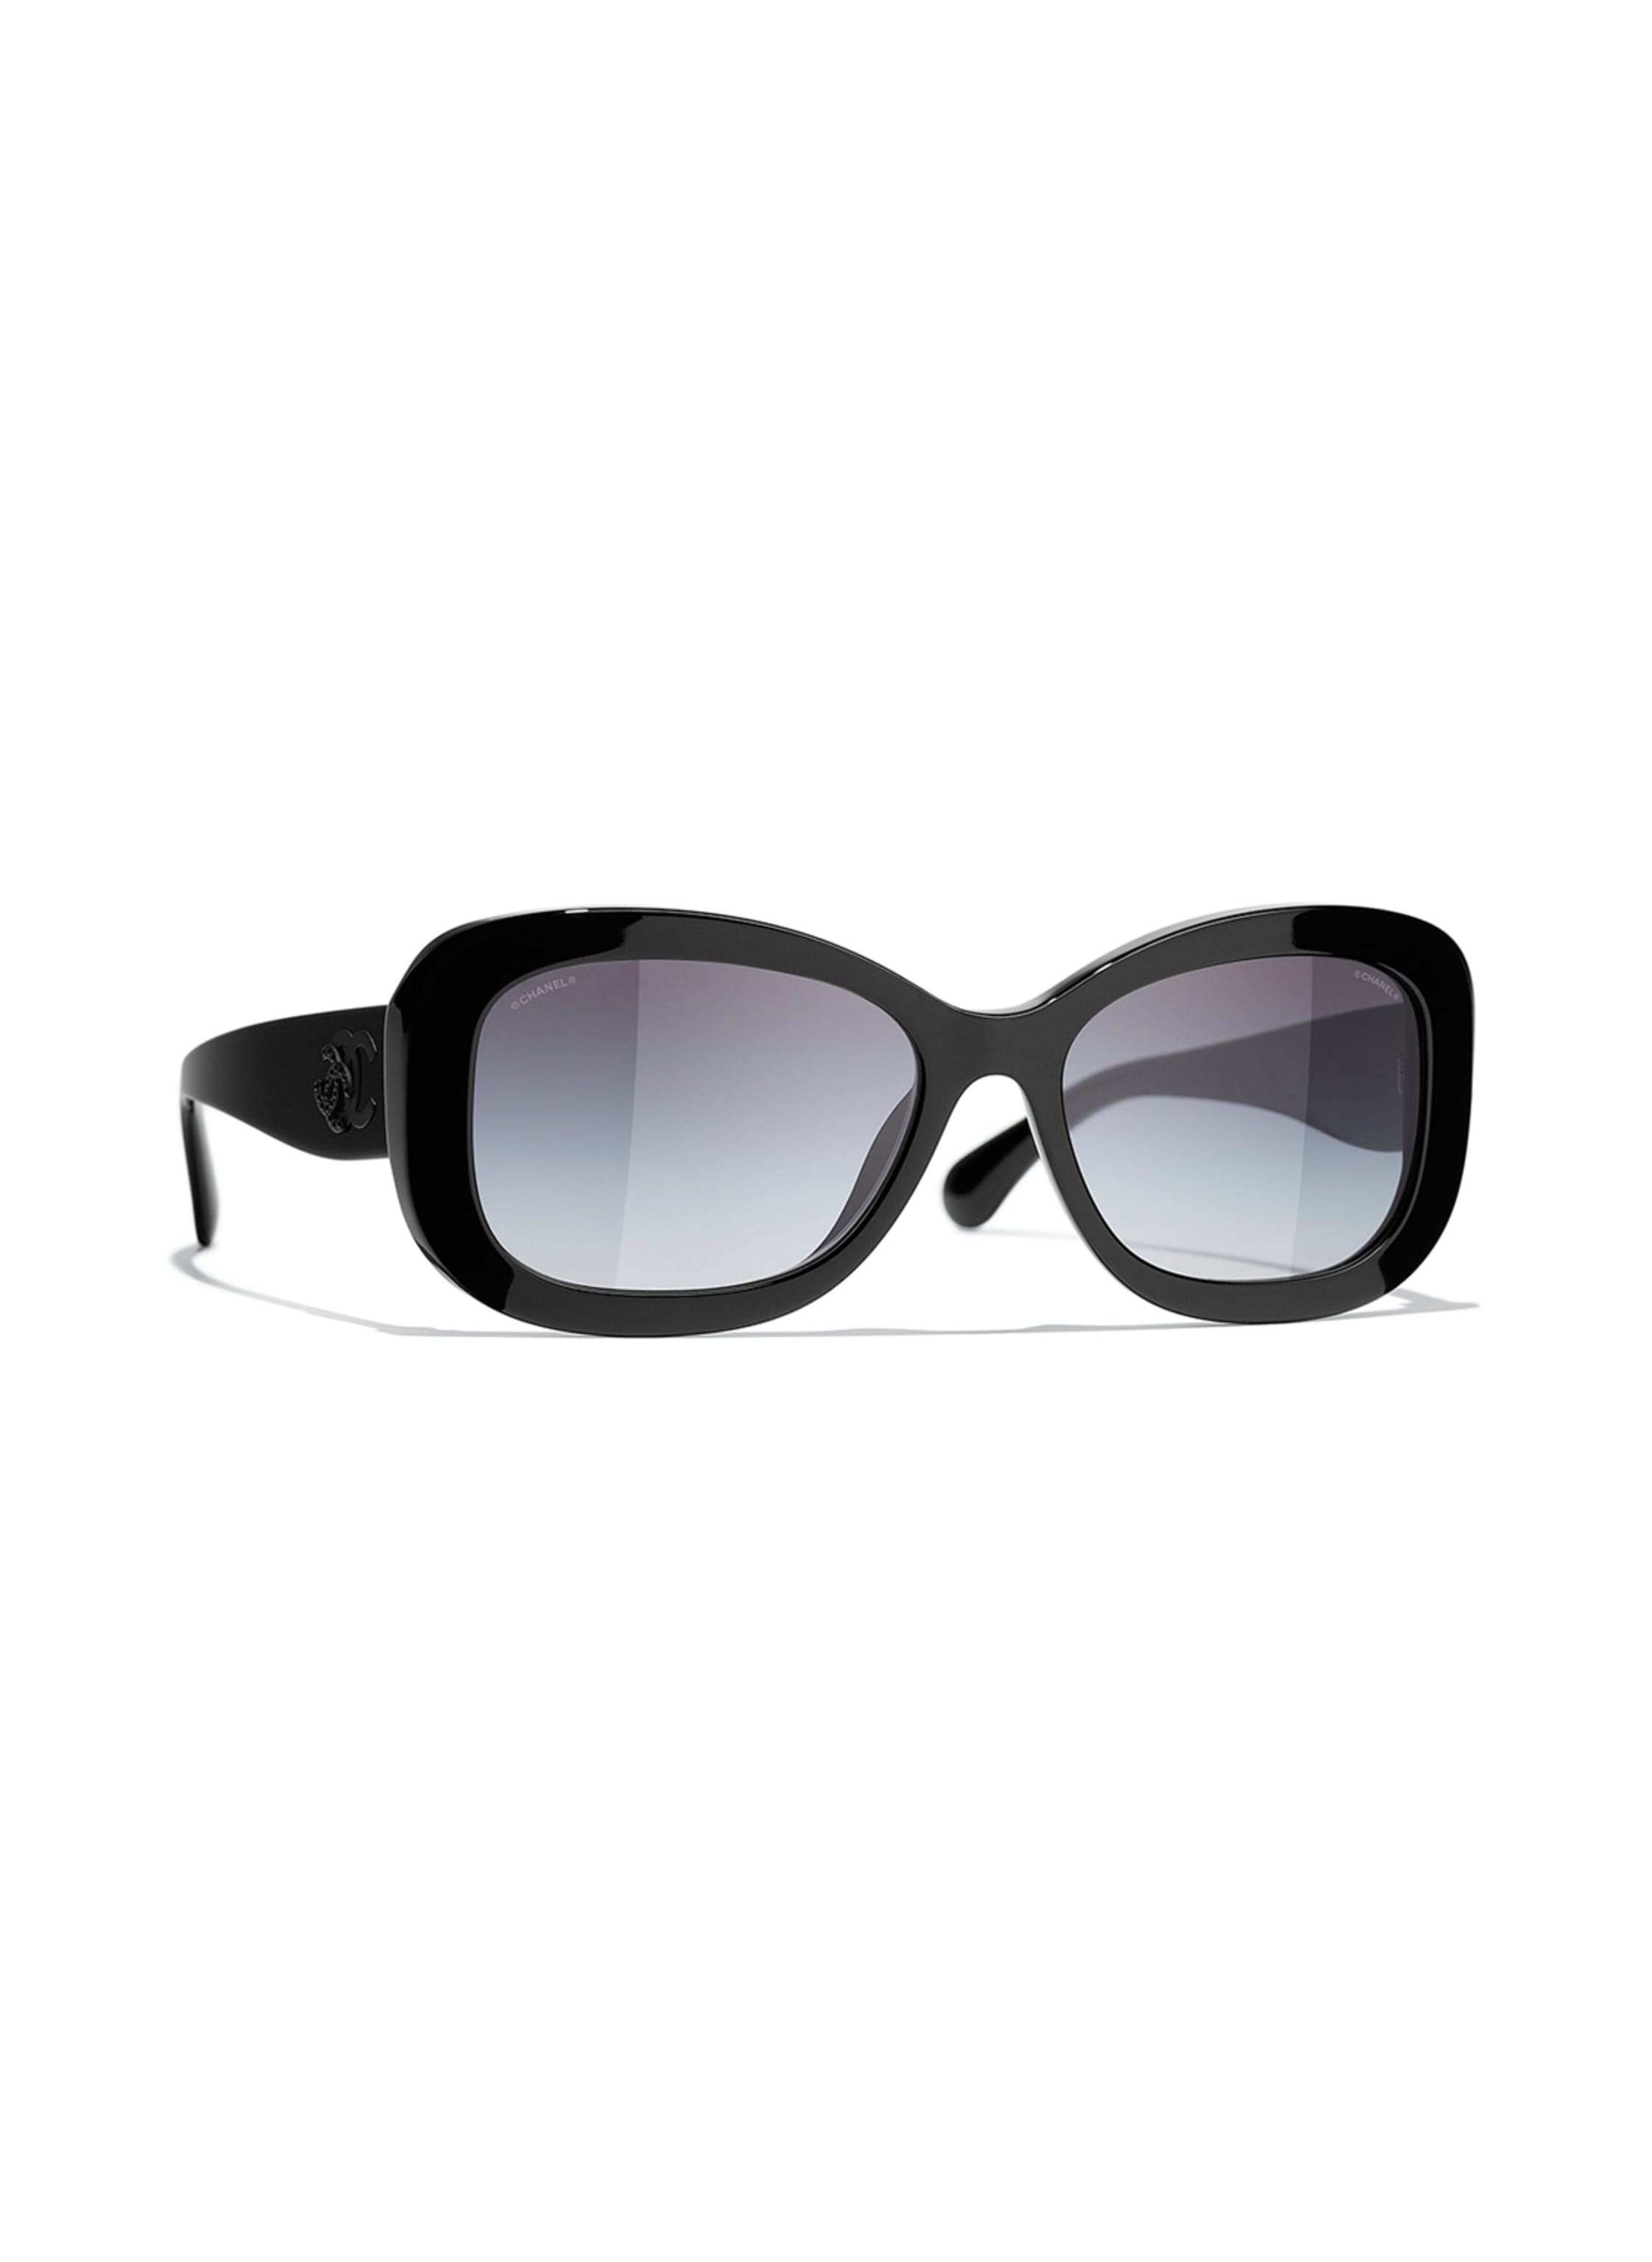 CHANEL Rectangular sunglasses in c888s6 - black/ gray gradient